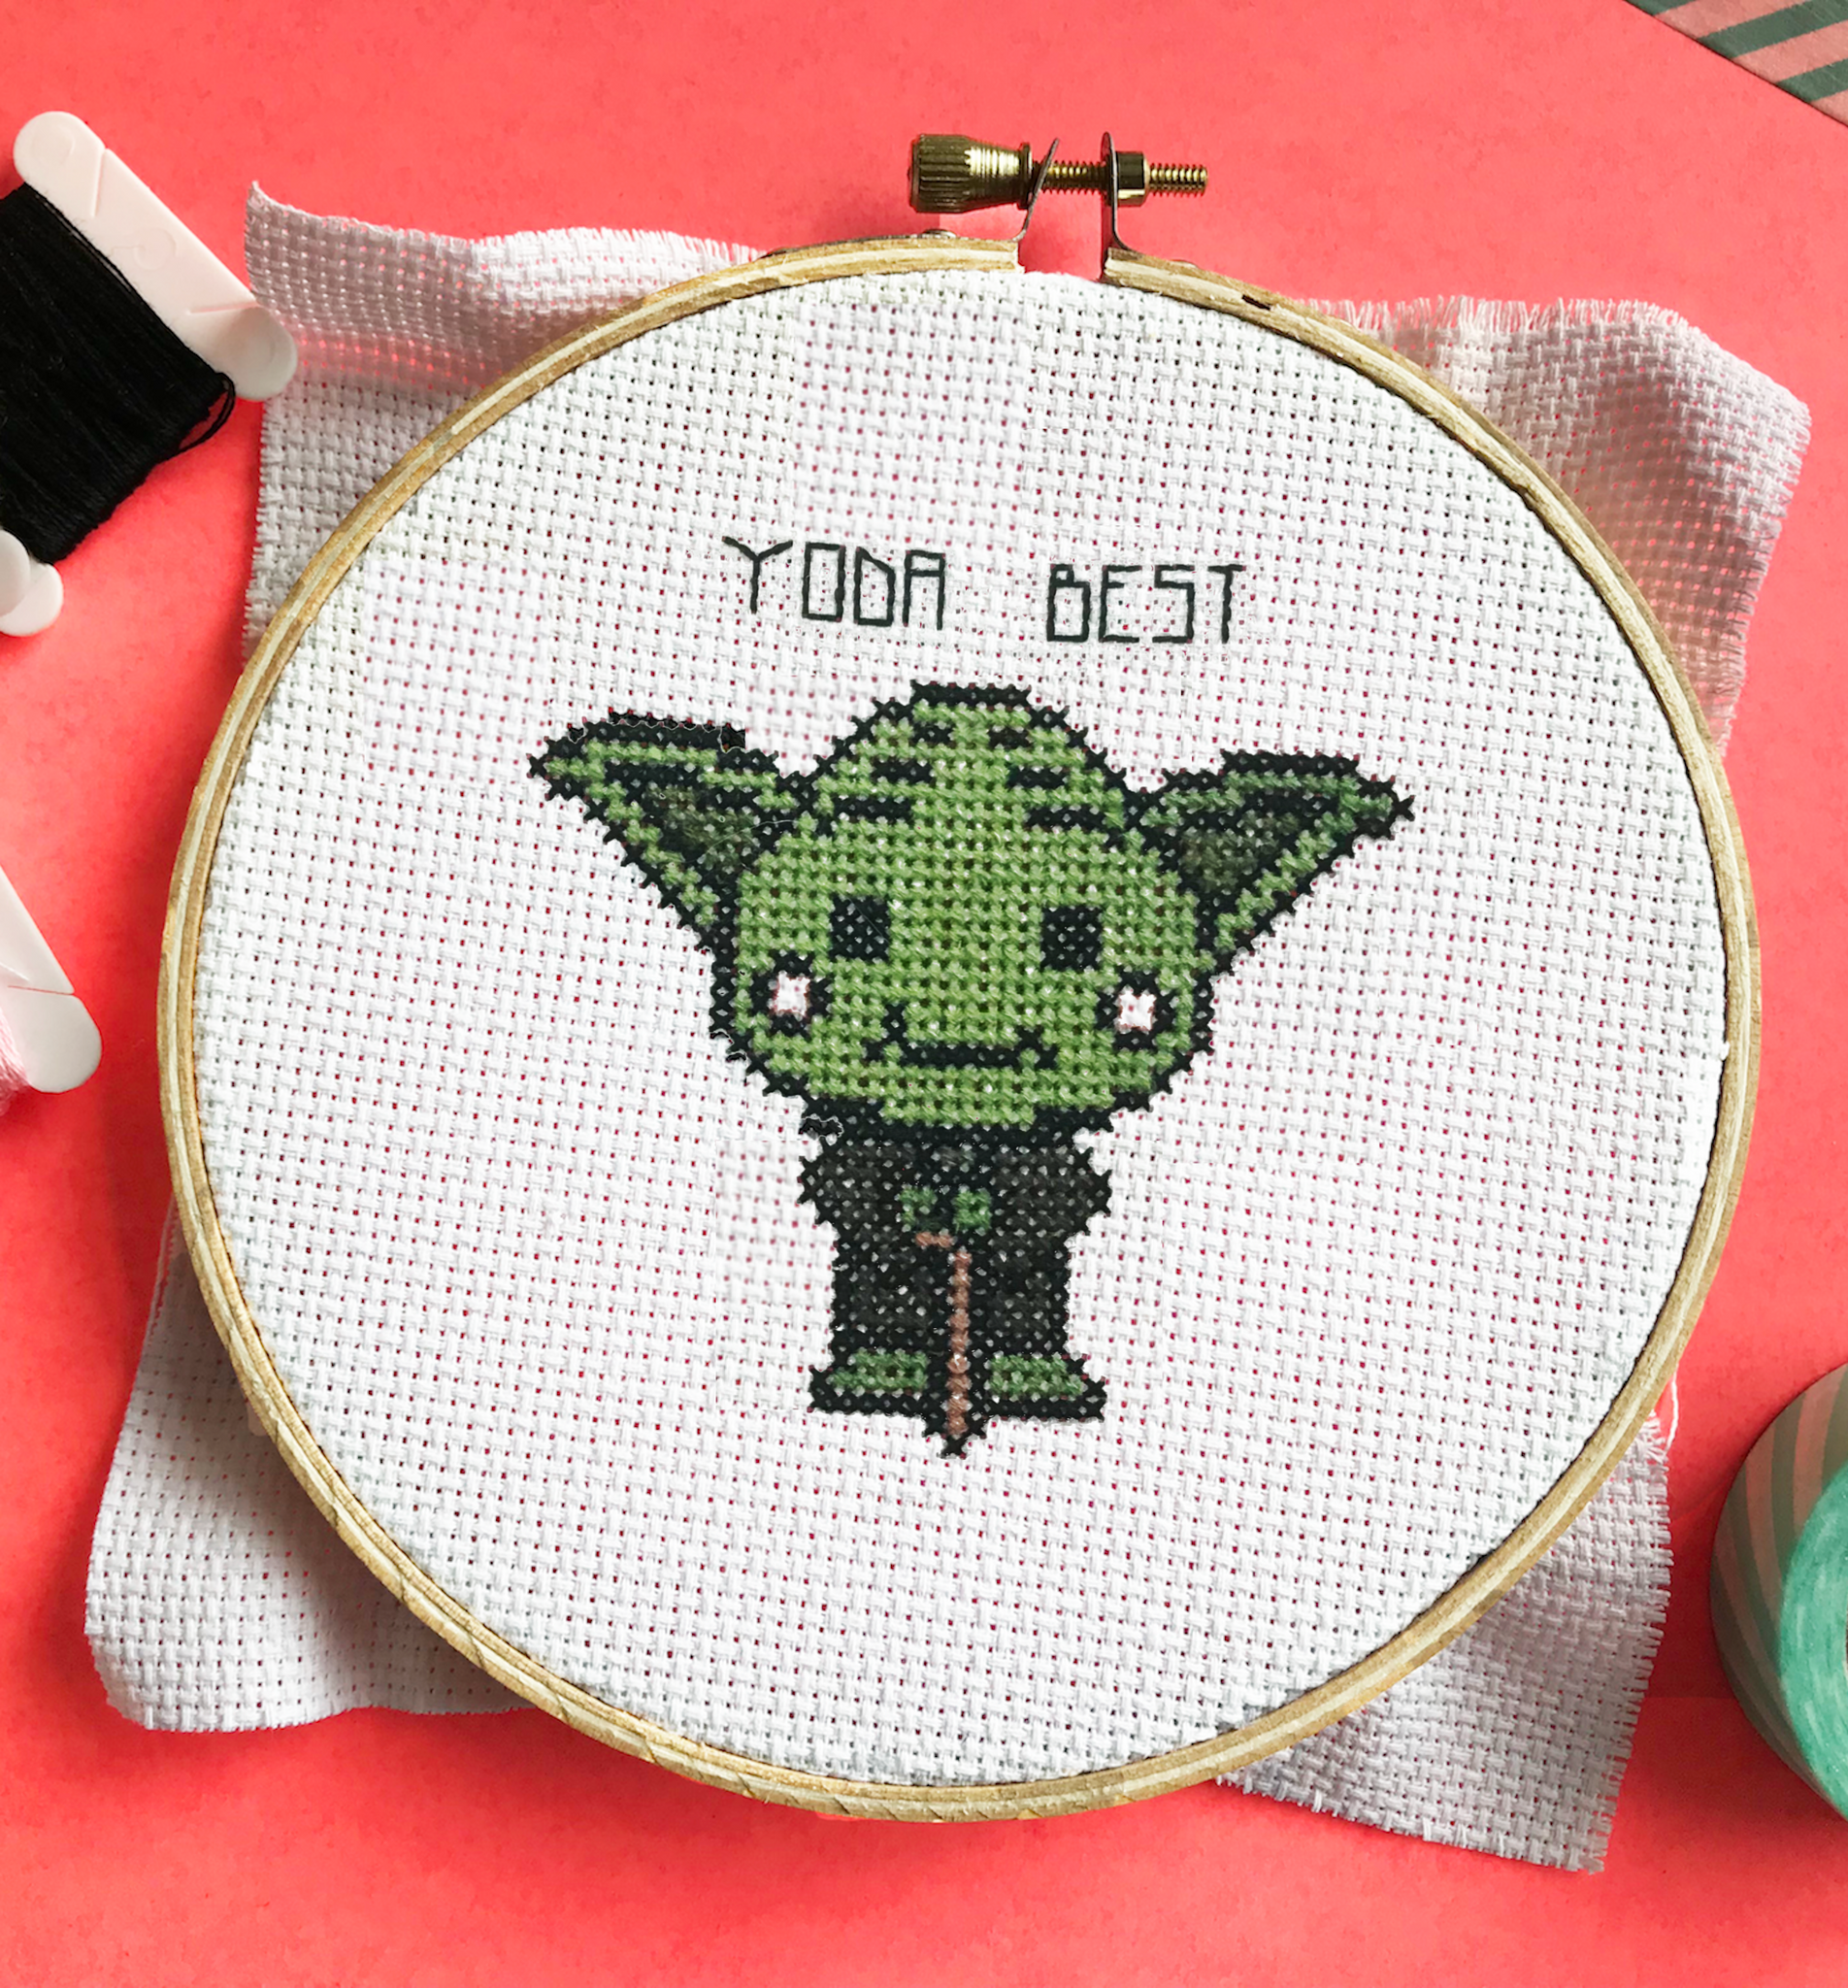 Yoda Best Star Wars Alien Father's Day Cross Stitch Craft Kit DIY Materials Included Intermediate aida hoop pattern, thread, cloth, needle